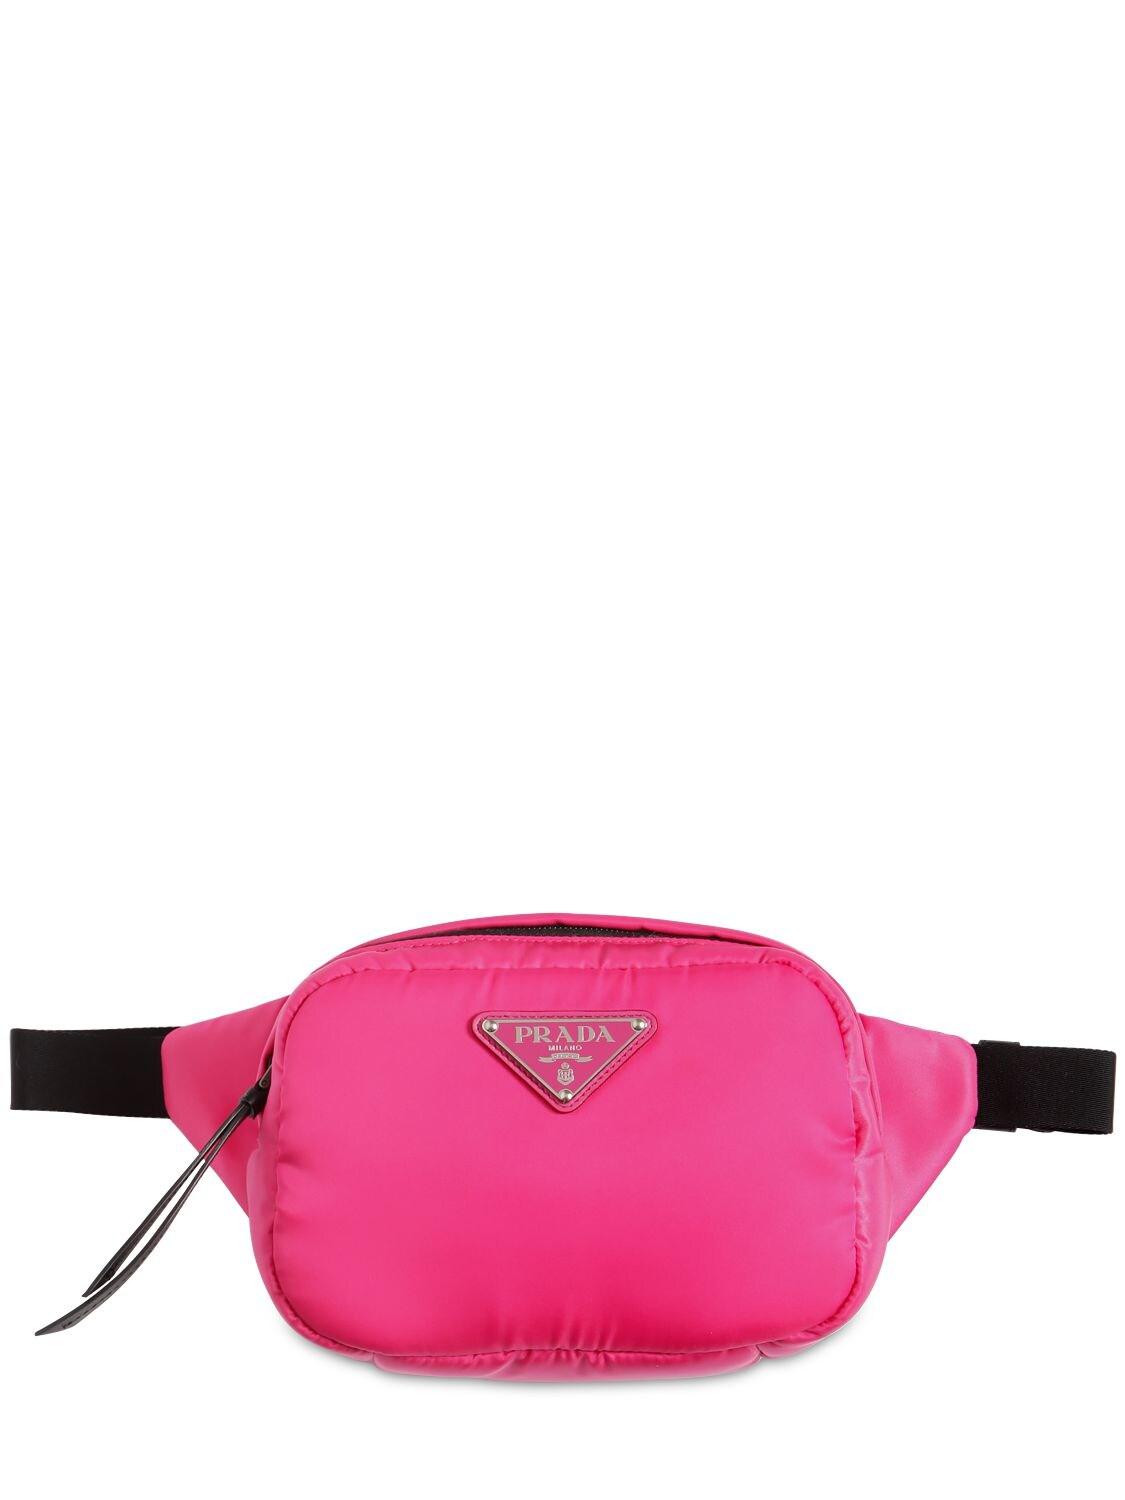 Prada Logo Plaque Padded Belt Bag in Fuchsia (Pink) - Lyst